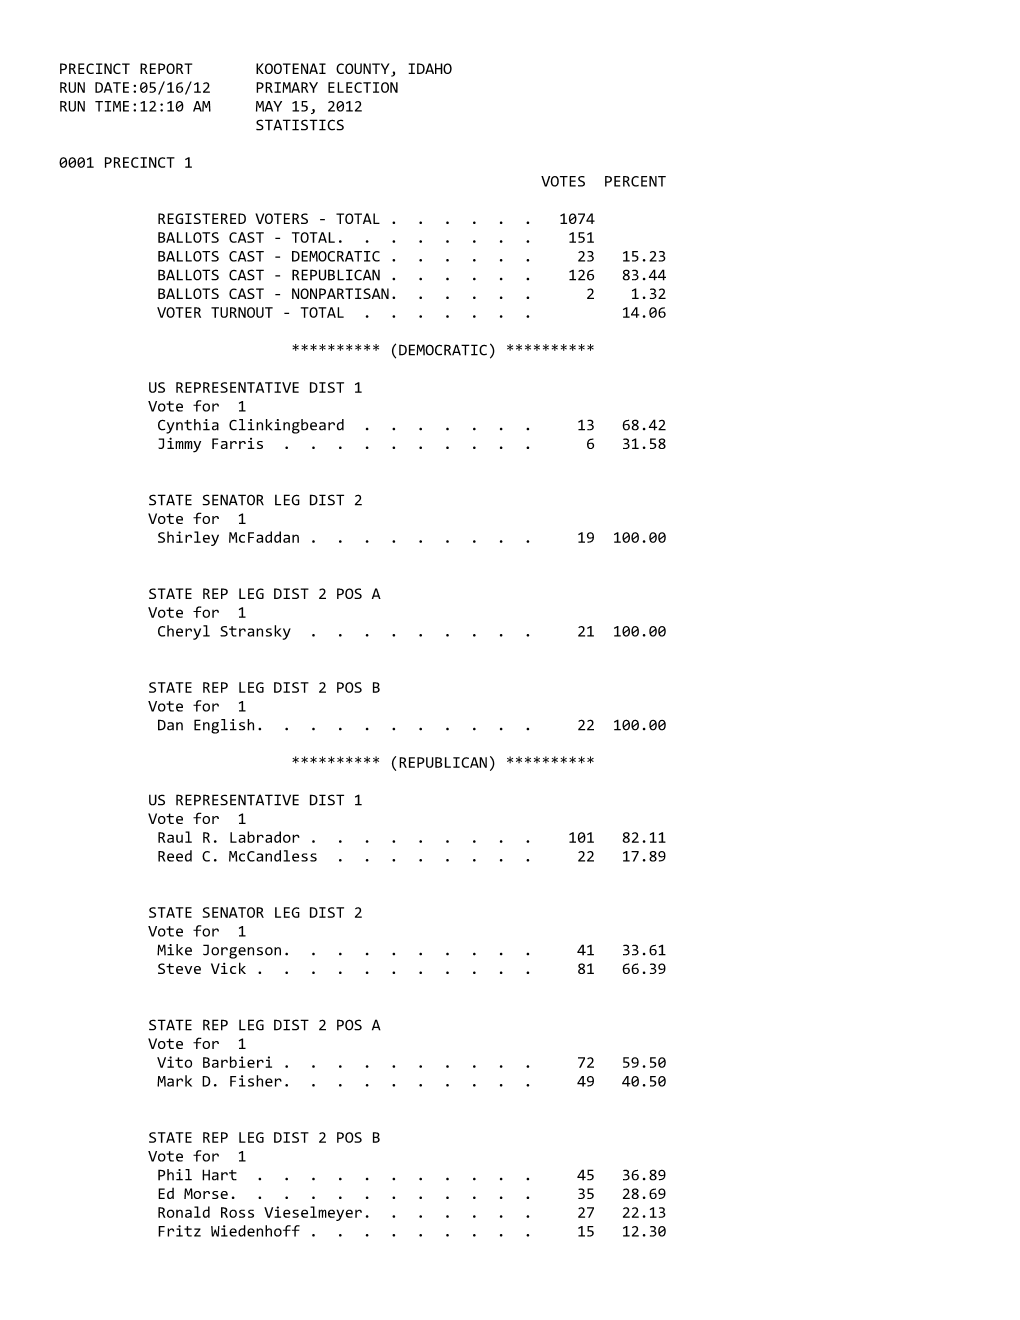 Precinct Report Kootenai County, Idaho Run Date:05/16/12 Primary Election Run Time:12:10 Am May 15, 2012 Statistics